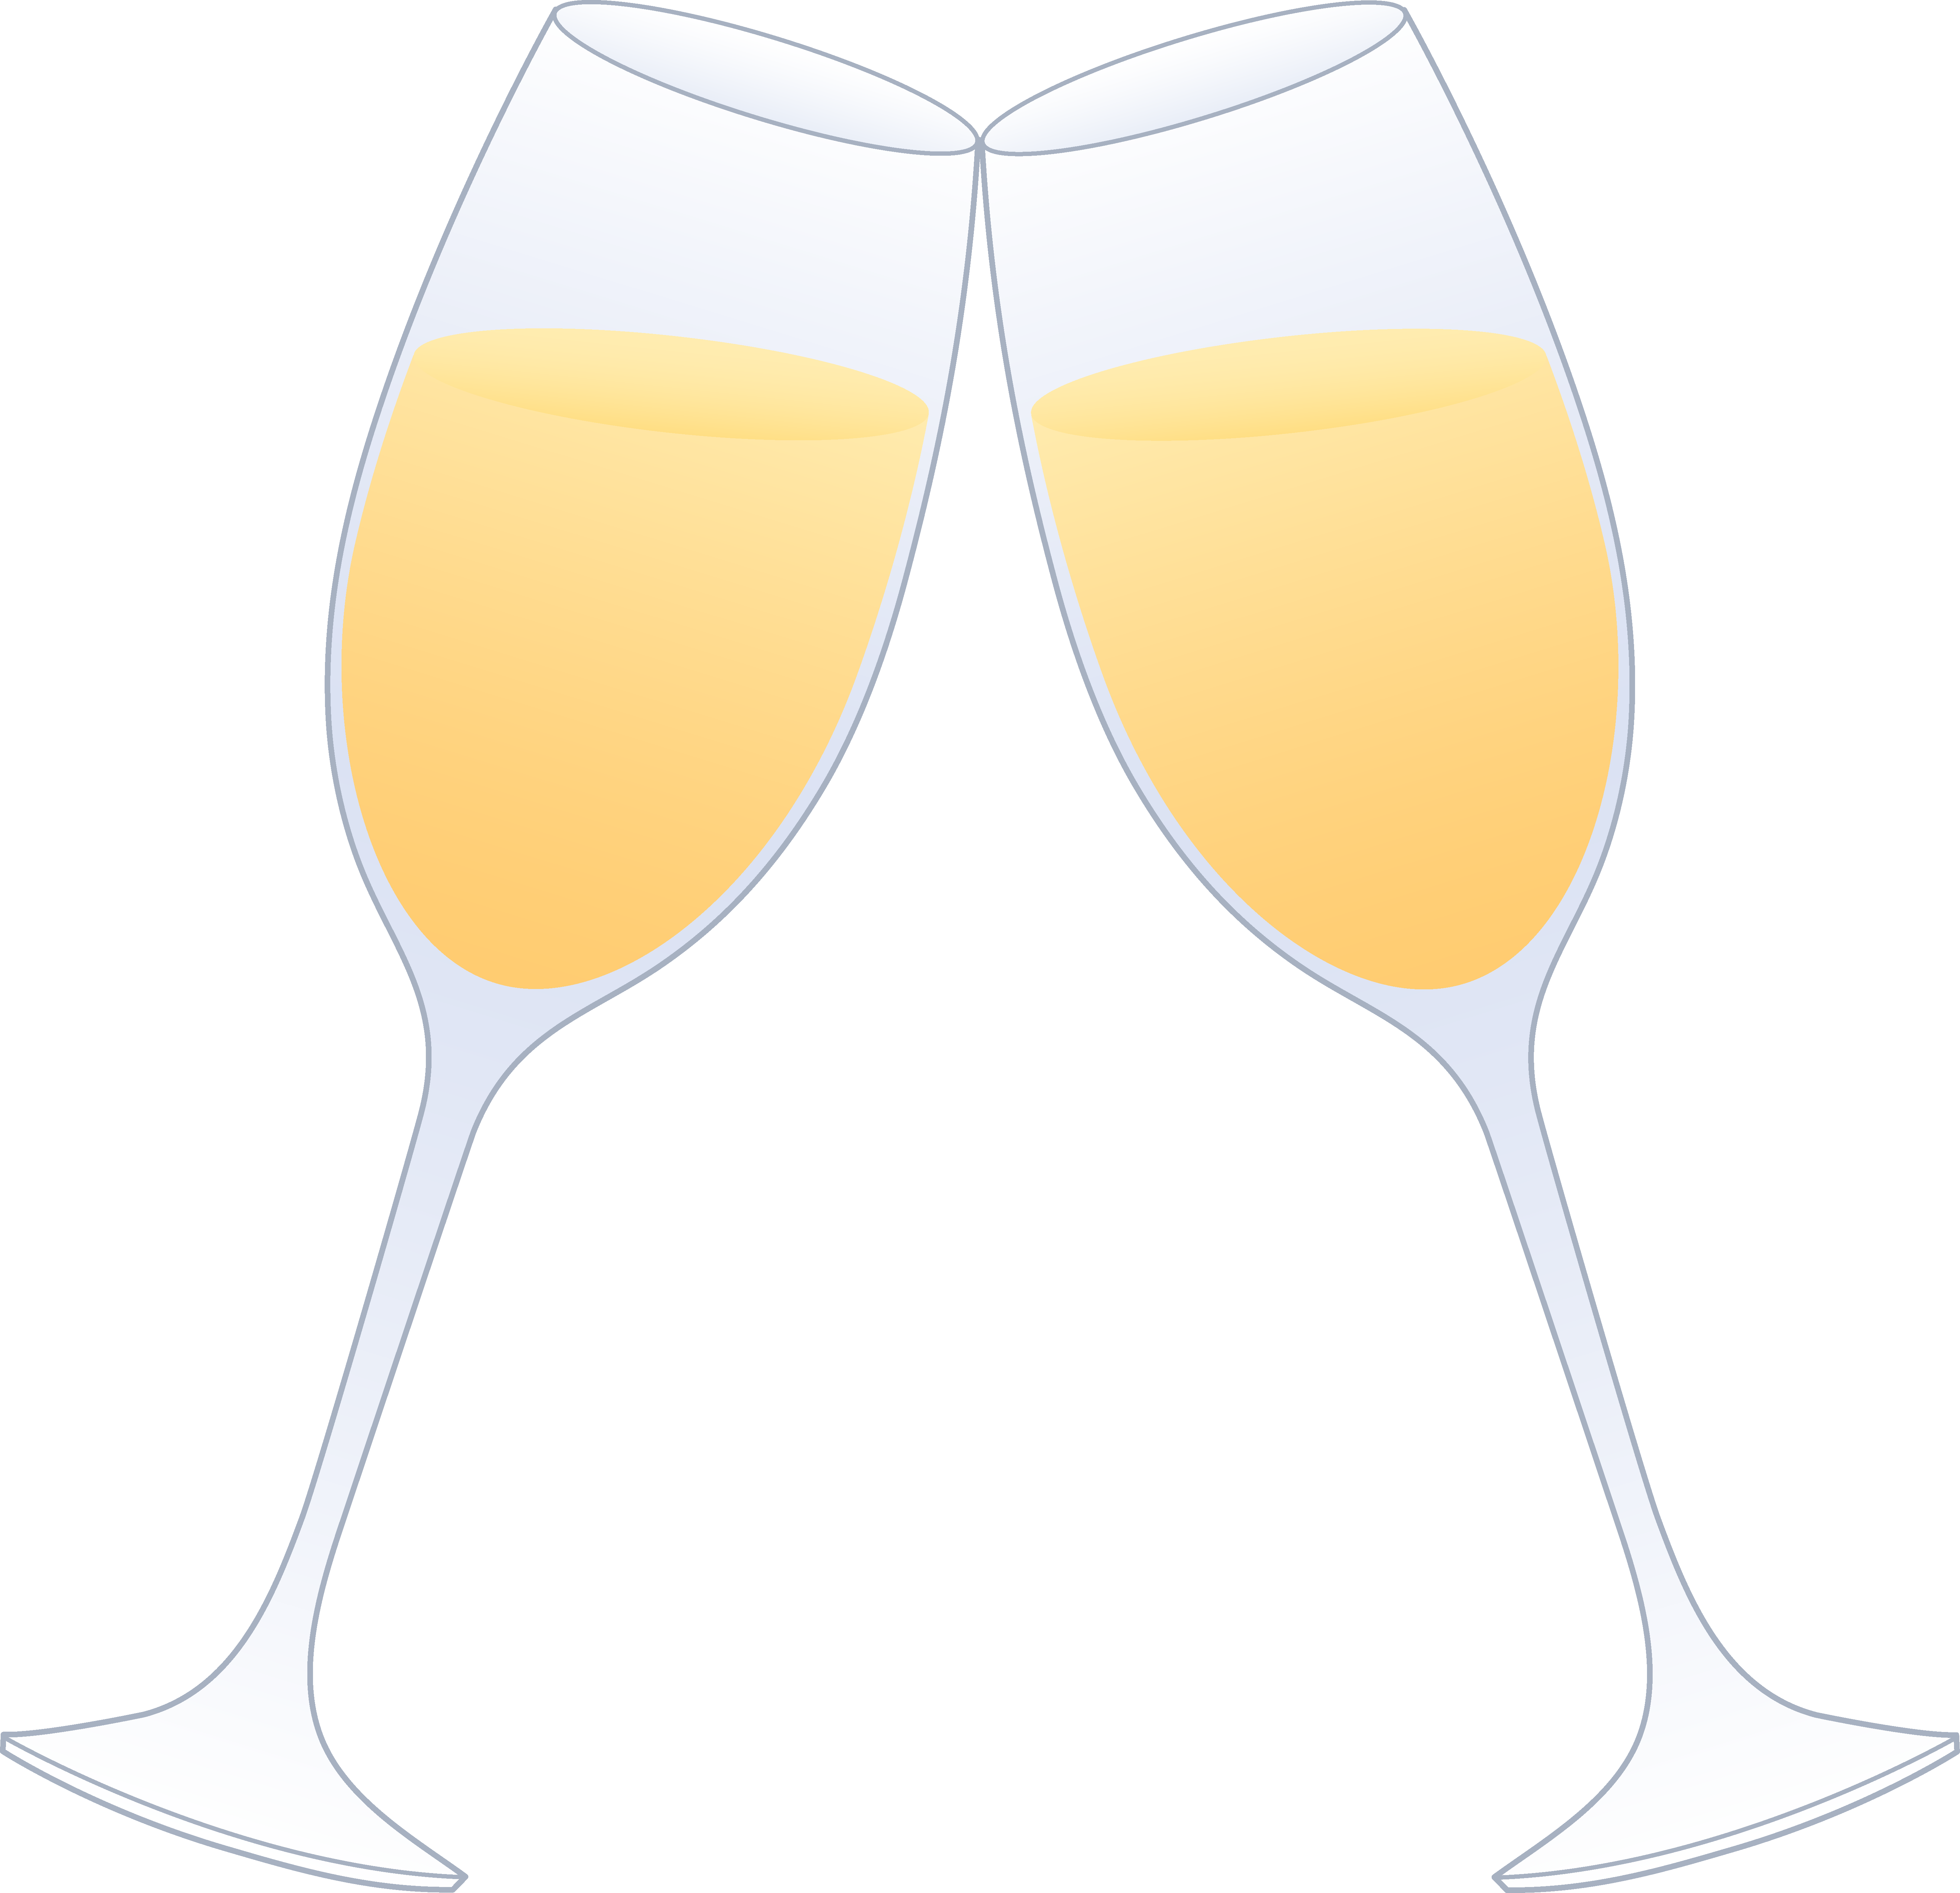 Champagne glass glasses of ch - Champagne Glasses Clip Art